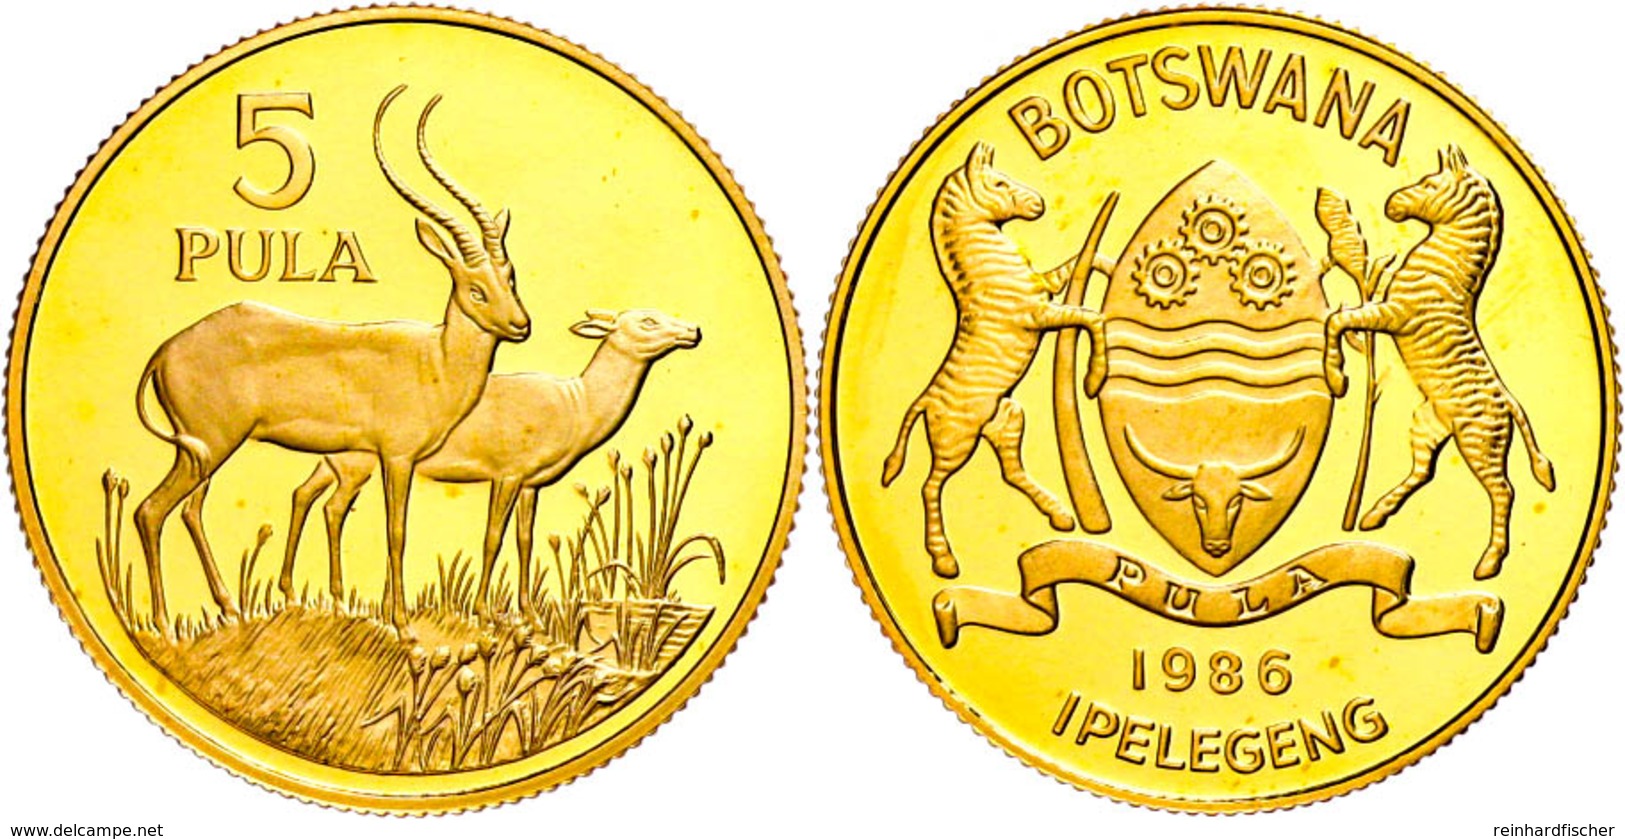 5 Pula, Gold, 1986, Red Lechwe (Moorantilope), 14,60g Fein, KM 19, In Kapsel, Mit WWF-Zertifikat, PP. Auflage 5000 Stück - Botswana